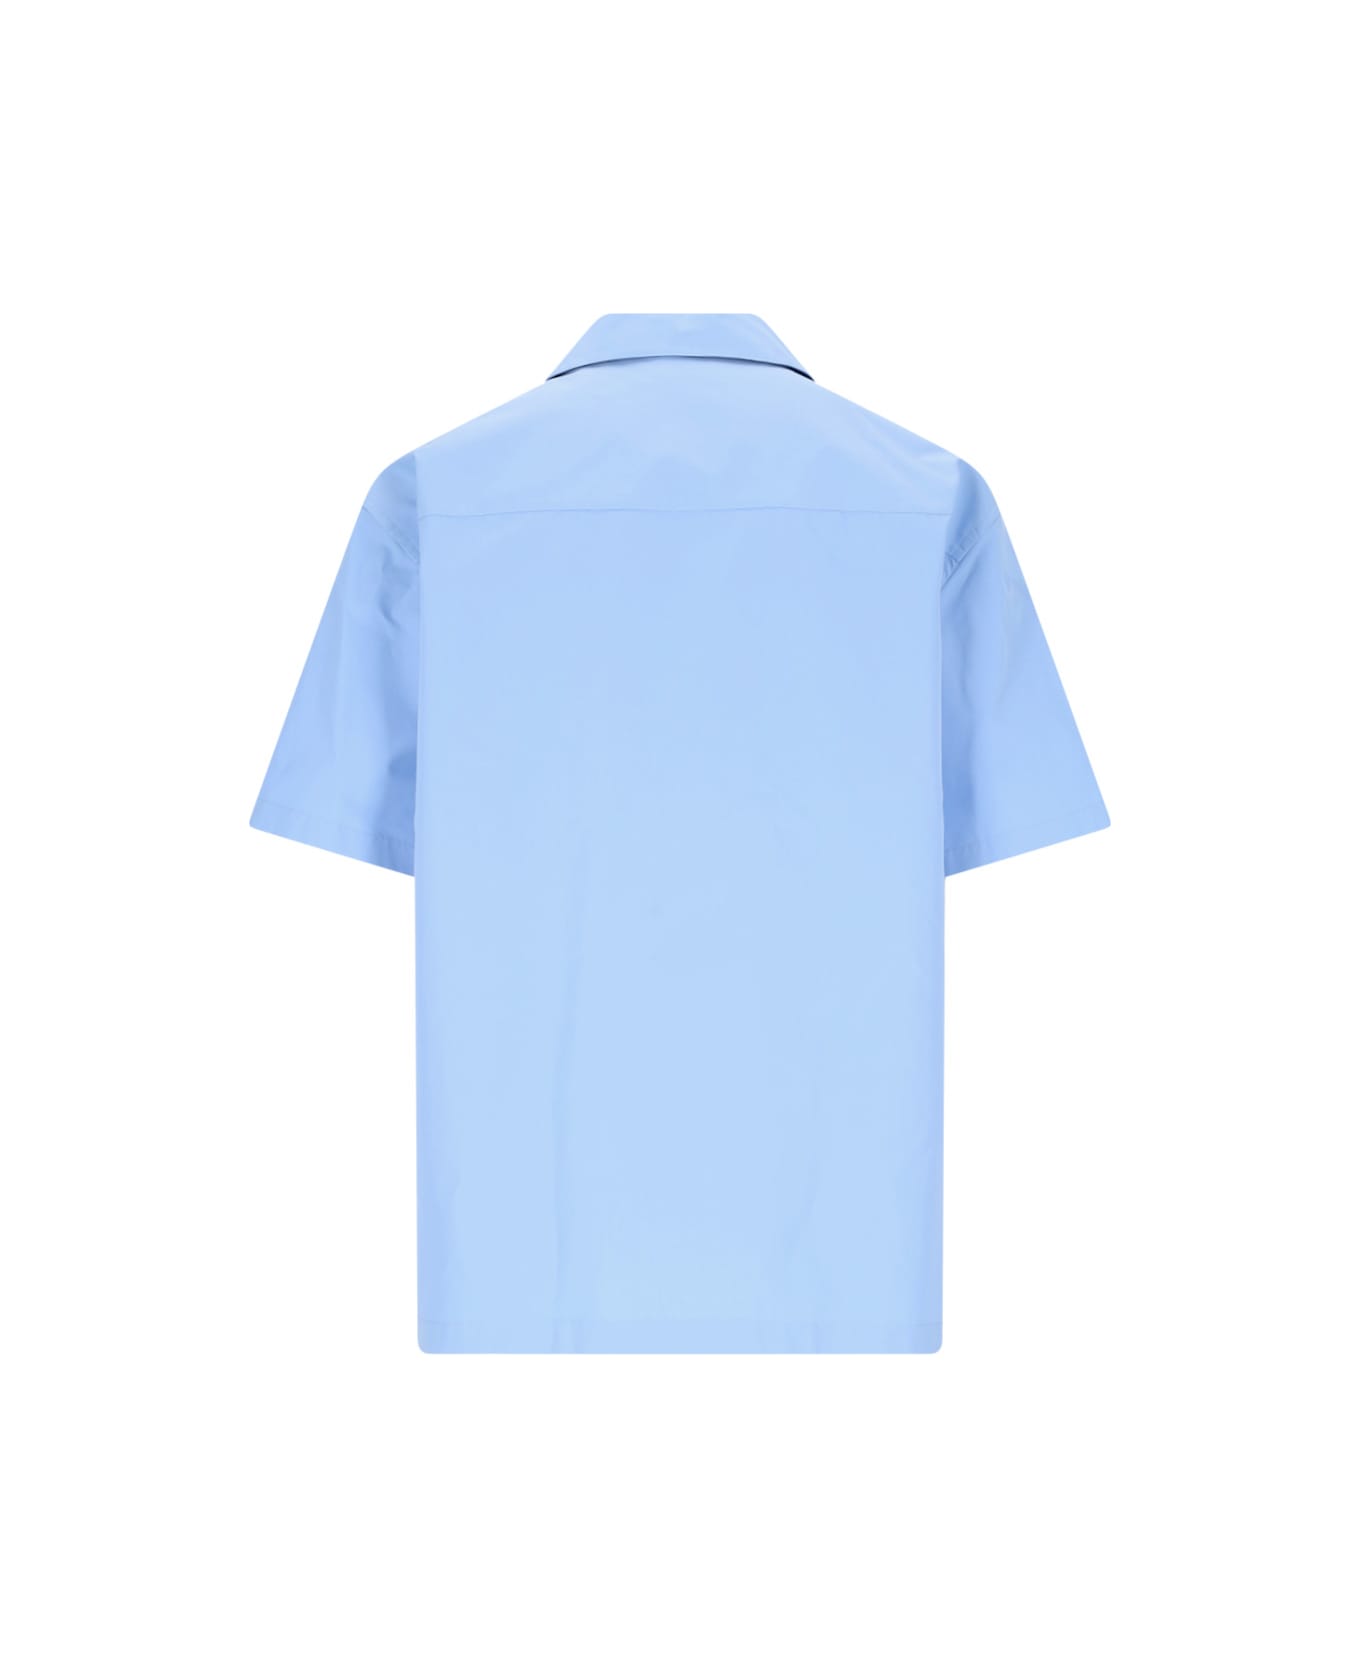 Jil Sander Boxy Shirt - 523 シャツ